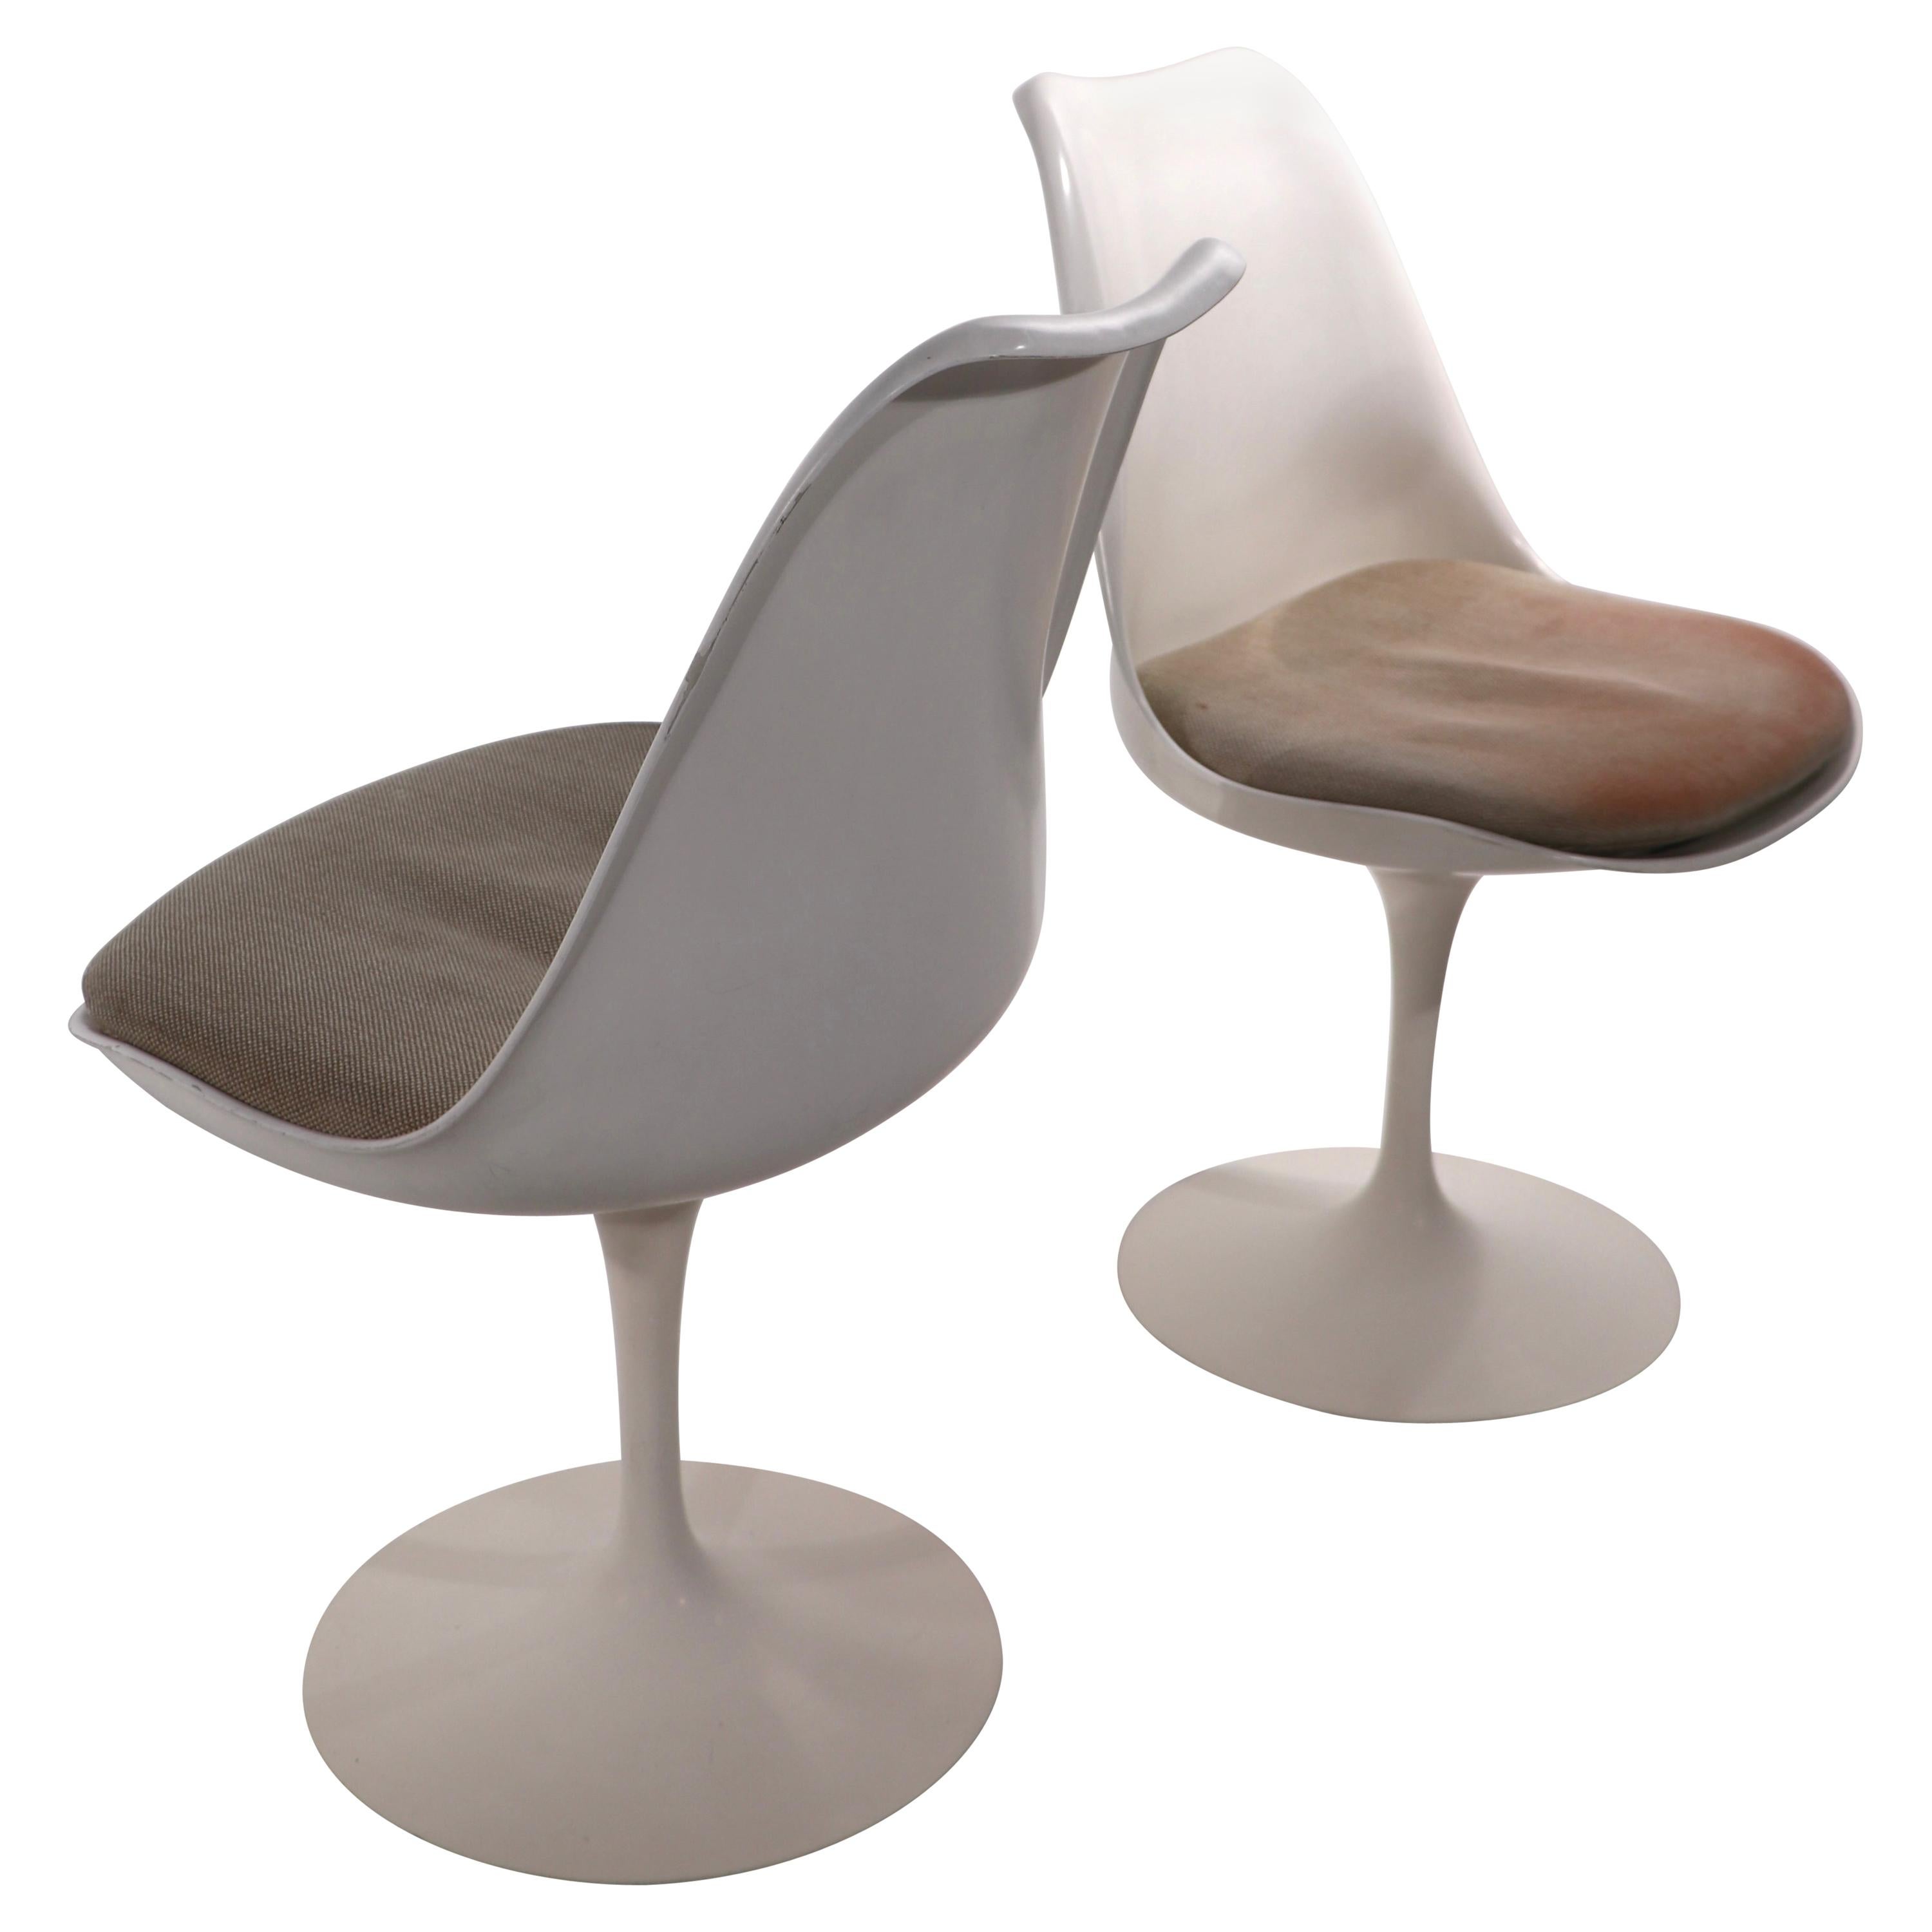 Pr. Eero Saarinen Tulip Chairs by Knoll